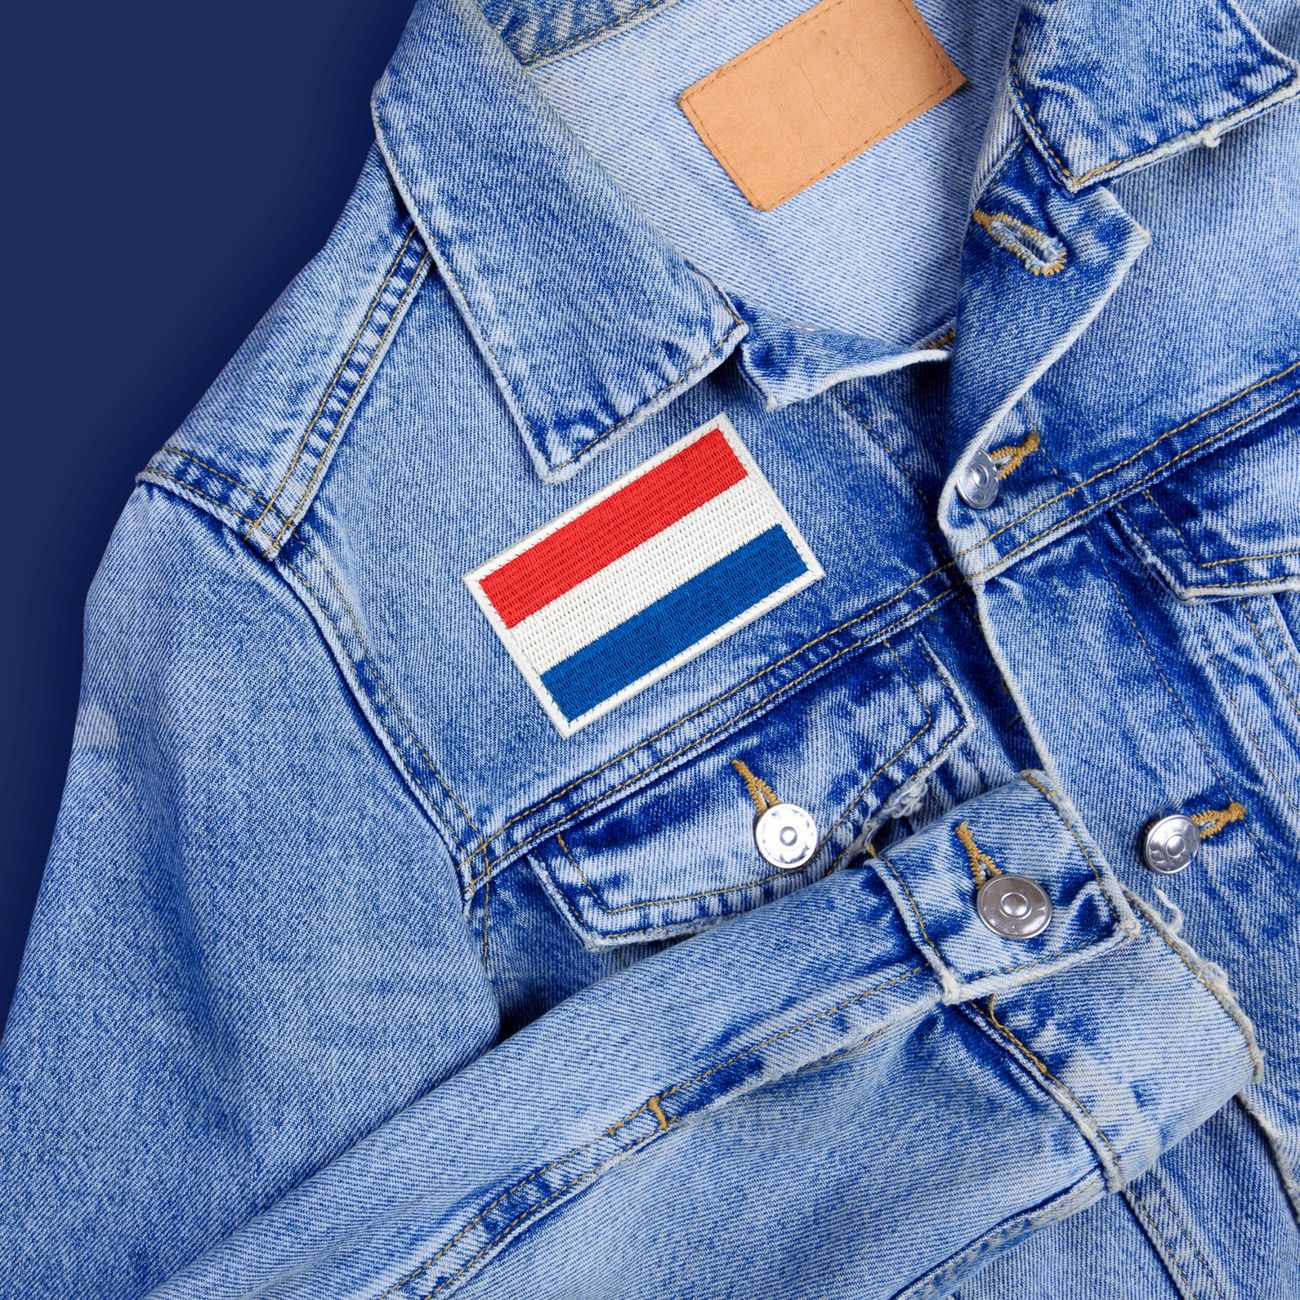 tygmarke-nederlandska-flaggan-92024-2